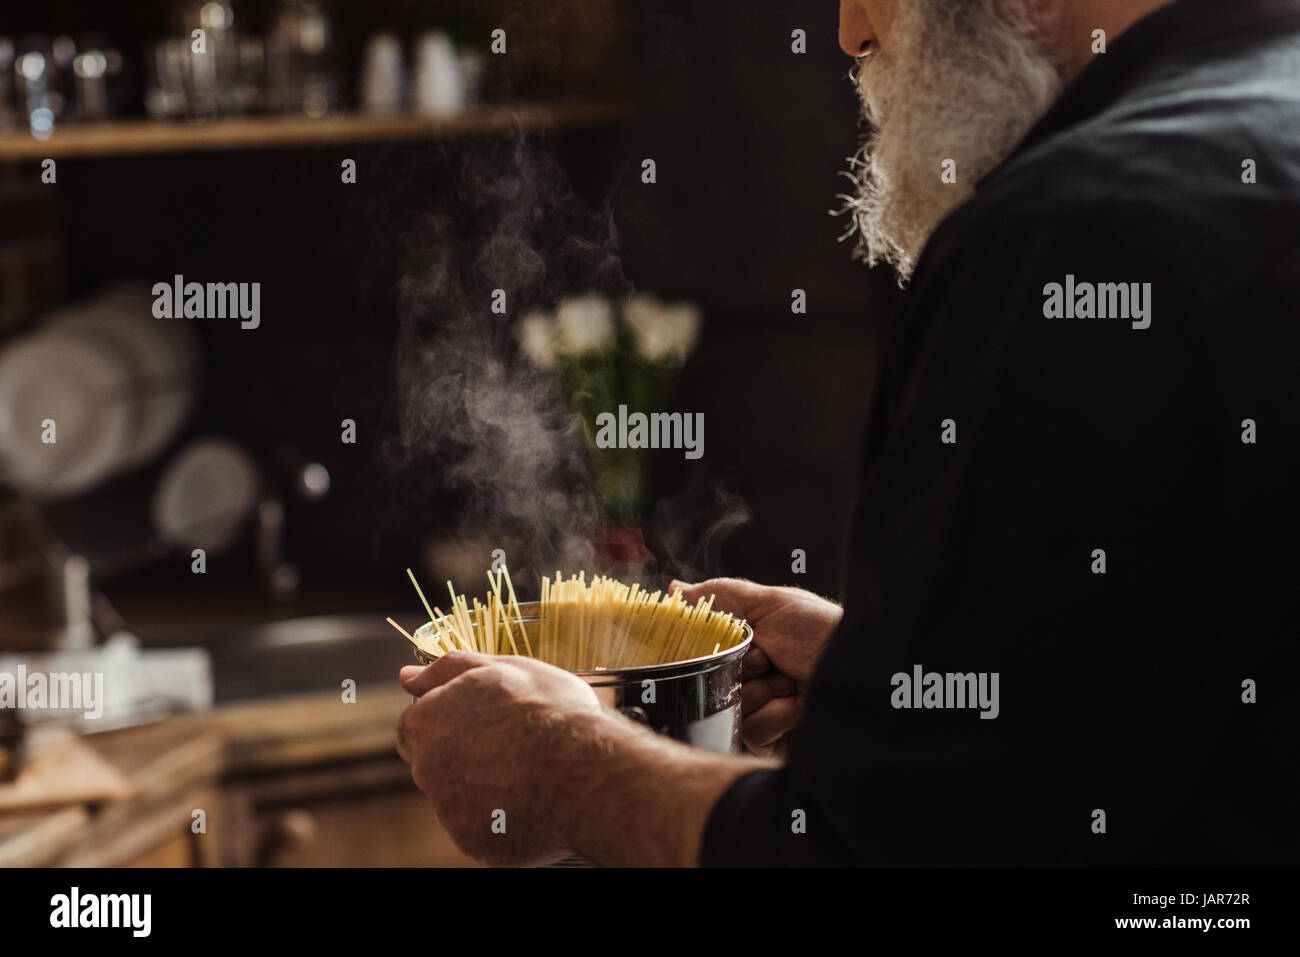 Man cooking spaghetti   Stock Photo